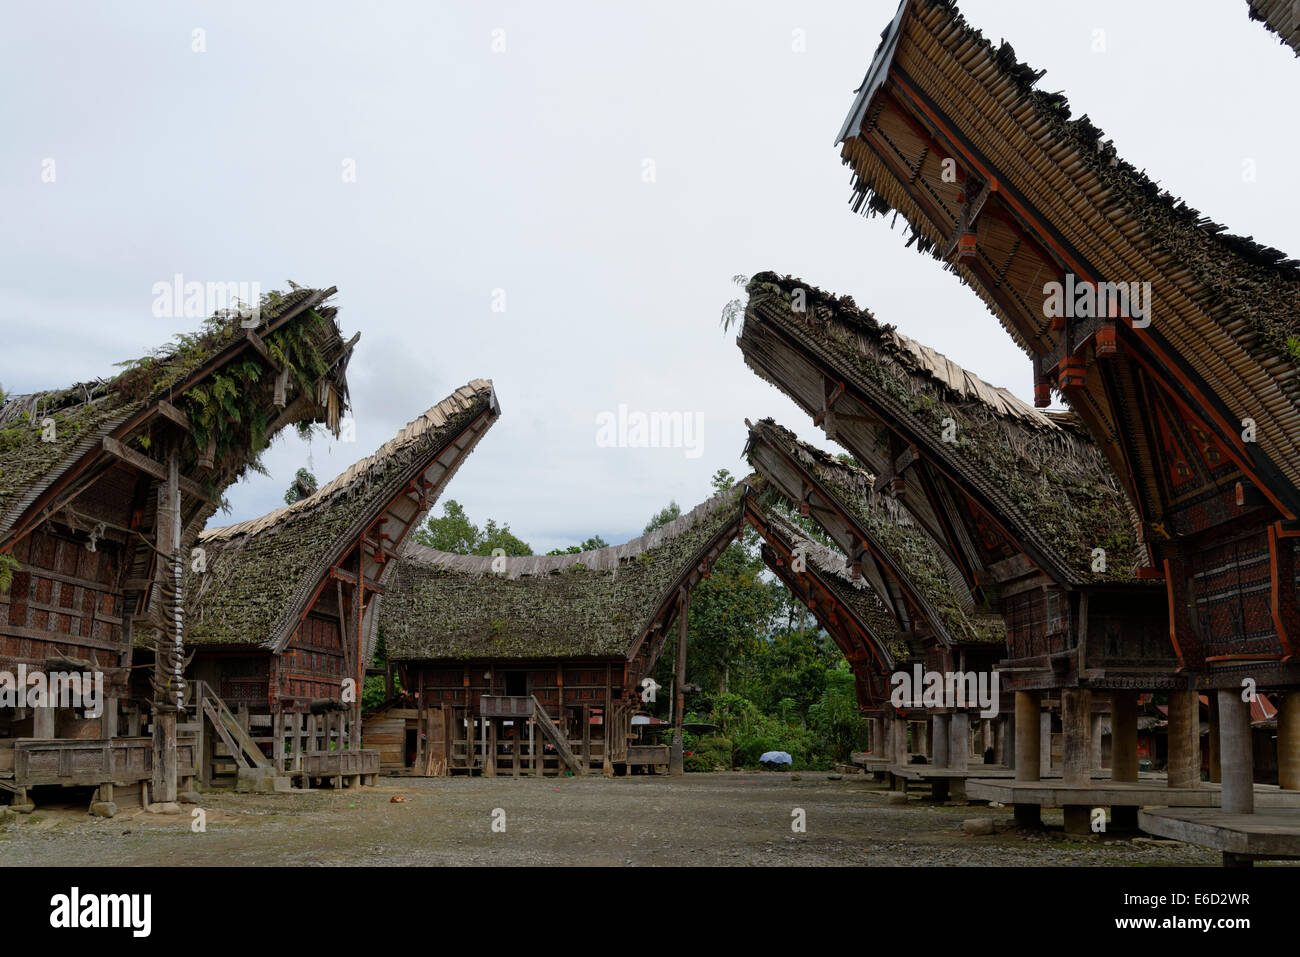 Traditionelle tongkonan storage Häuser, Dorf palawa, rantepao, Sulawesi Selatan, Indonesien Stockfoto